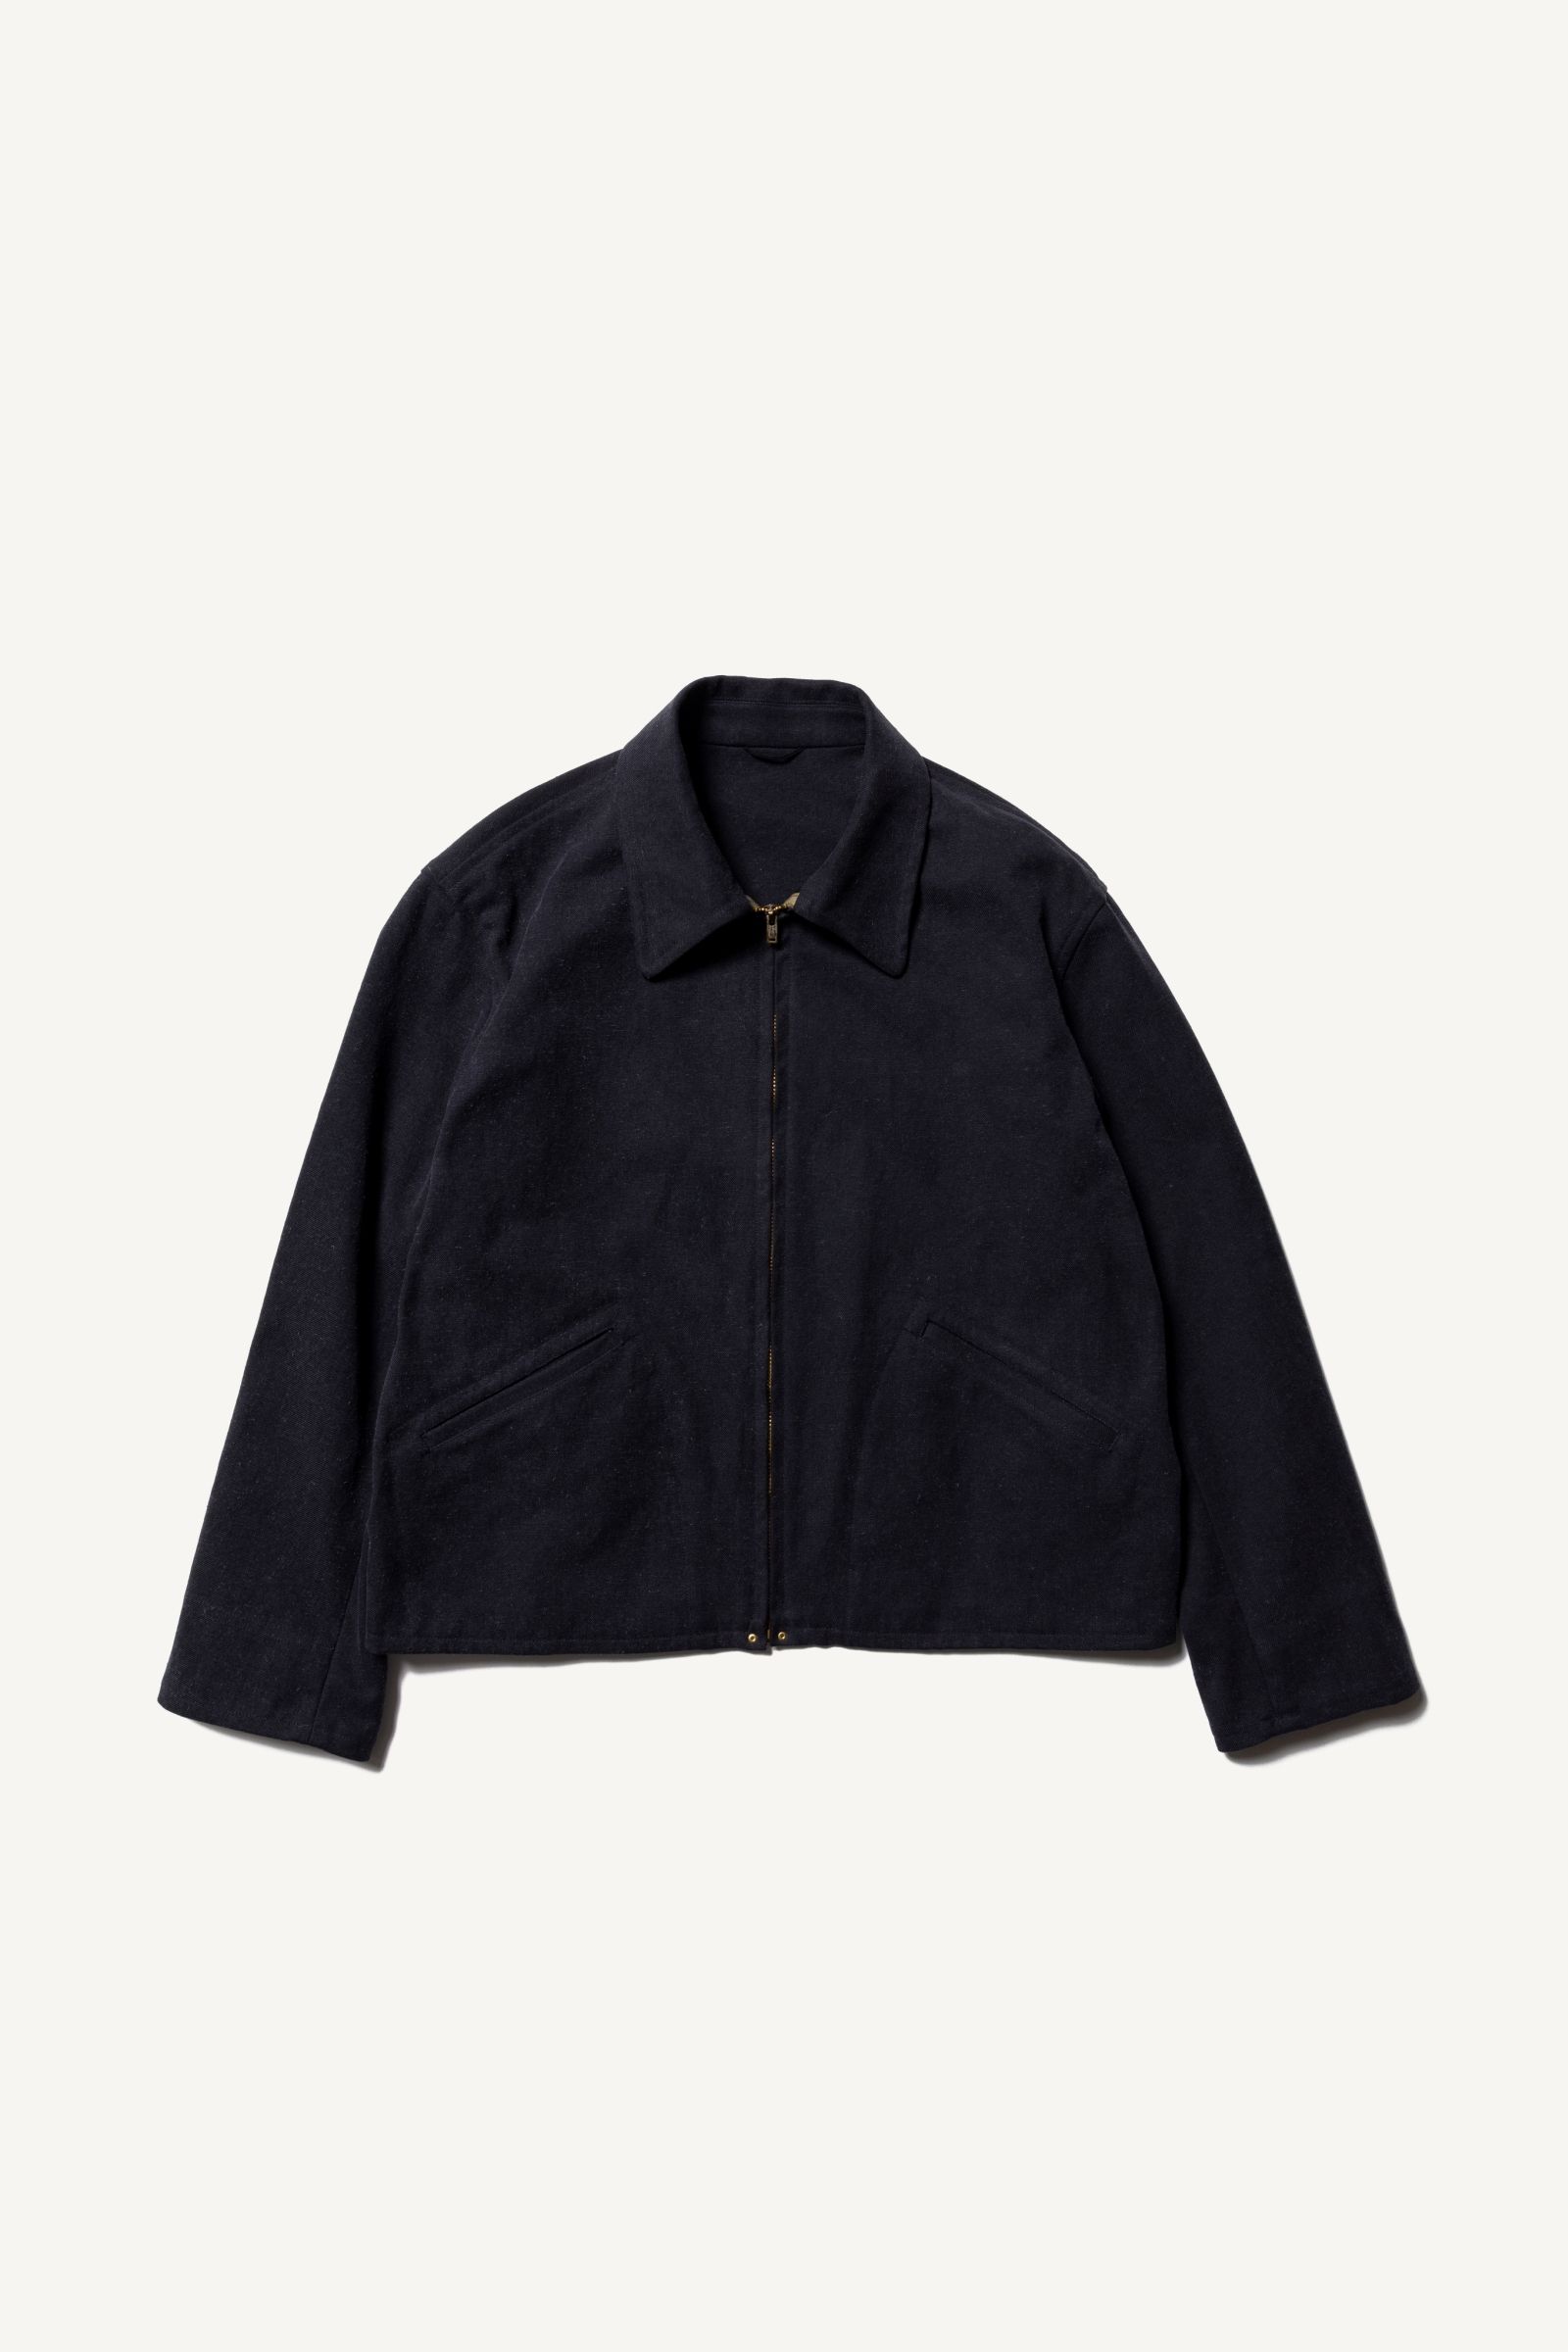 A.PRESSE - silk nep sports jacket -dark navy- 23ss | asterisk